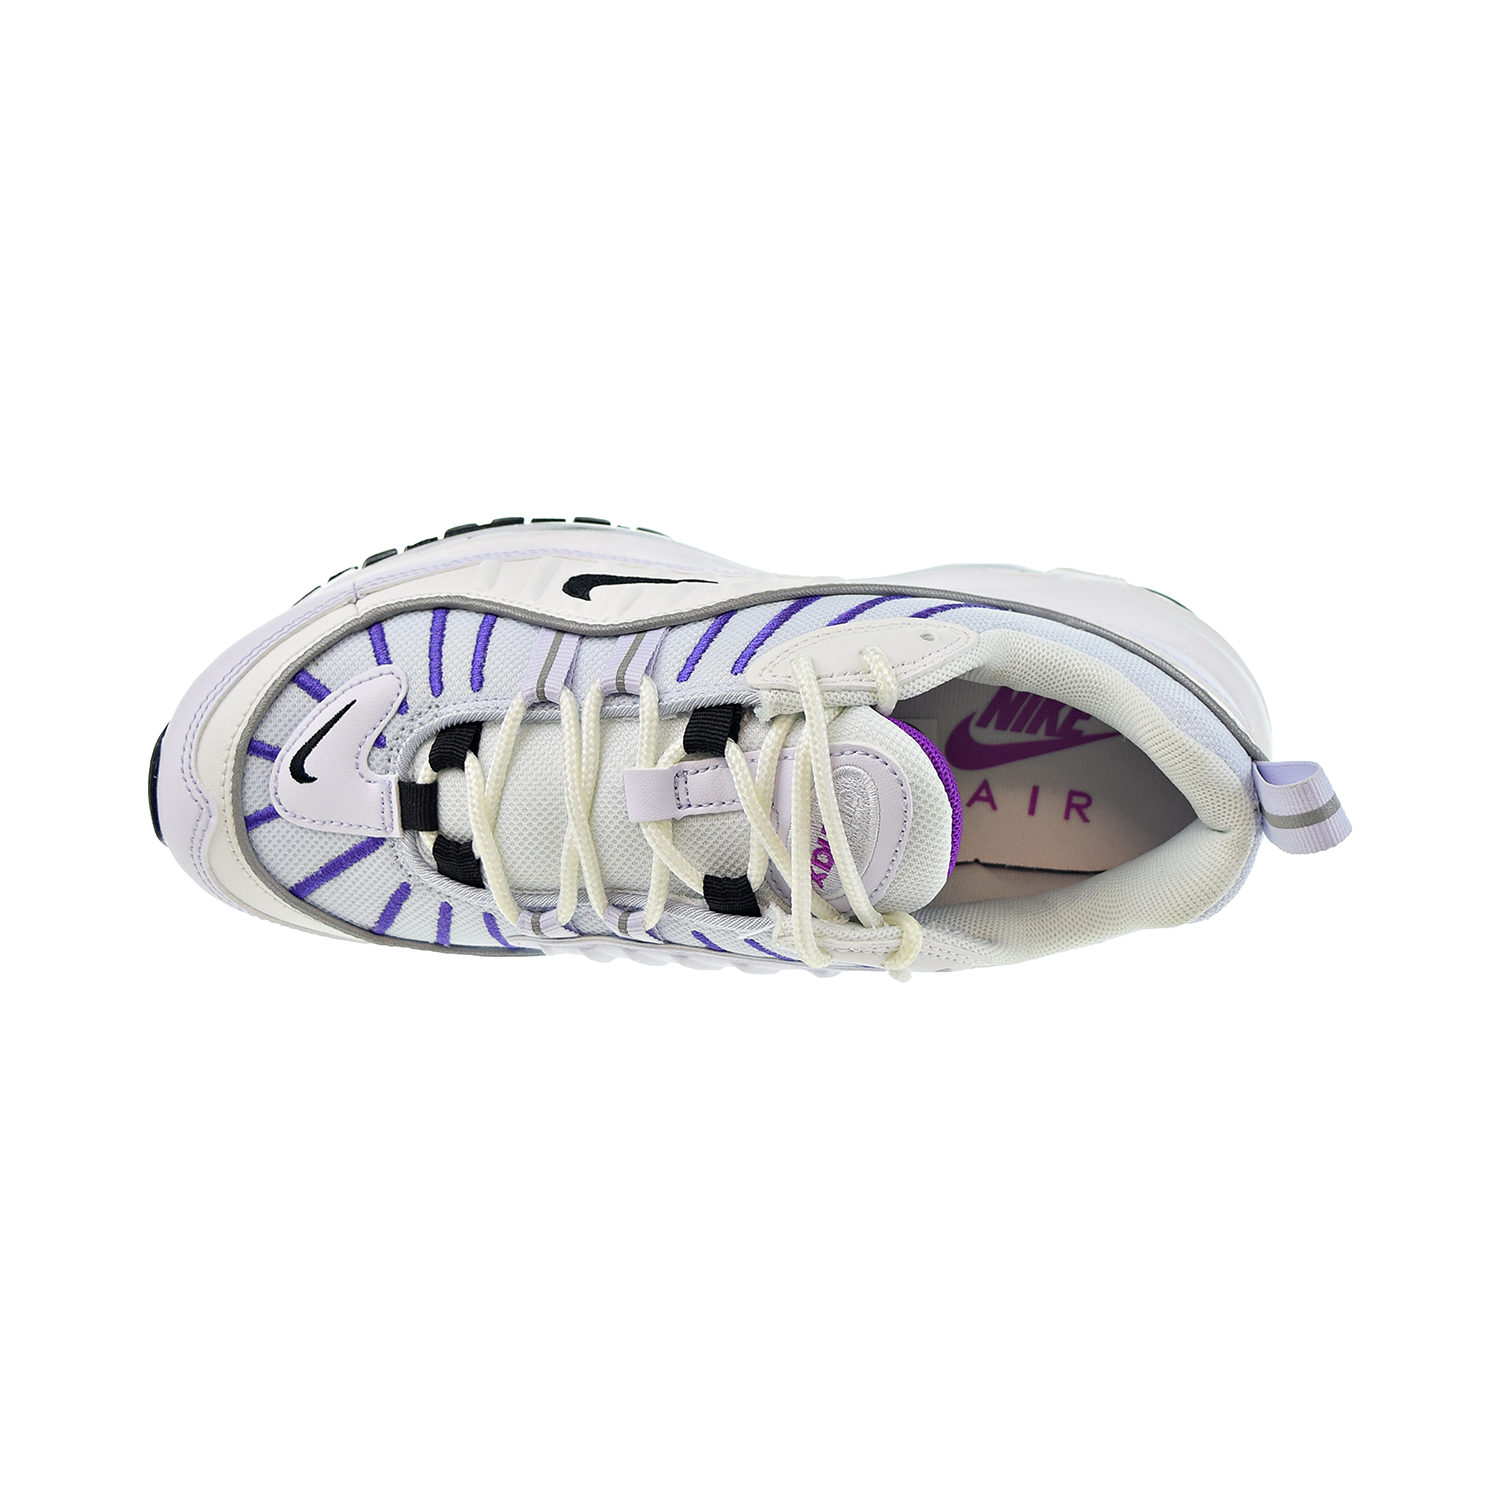 Nike Air Max 98 Women's Shoes Football Grey-Black ah6799-023 - image 5 of 6